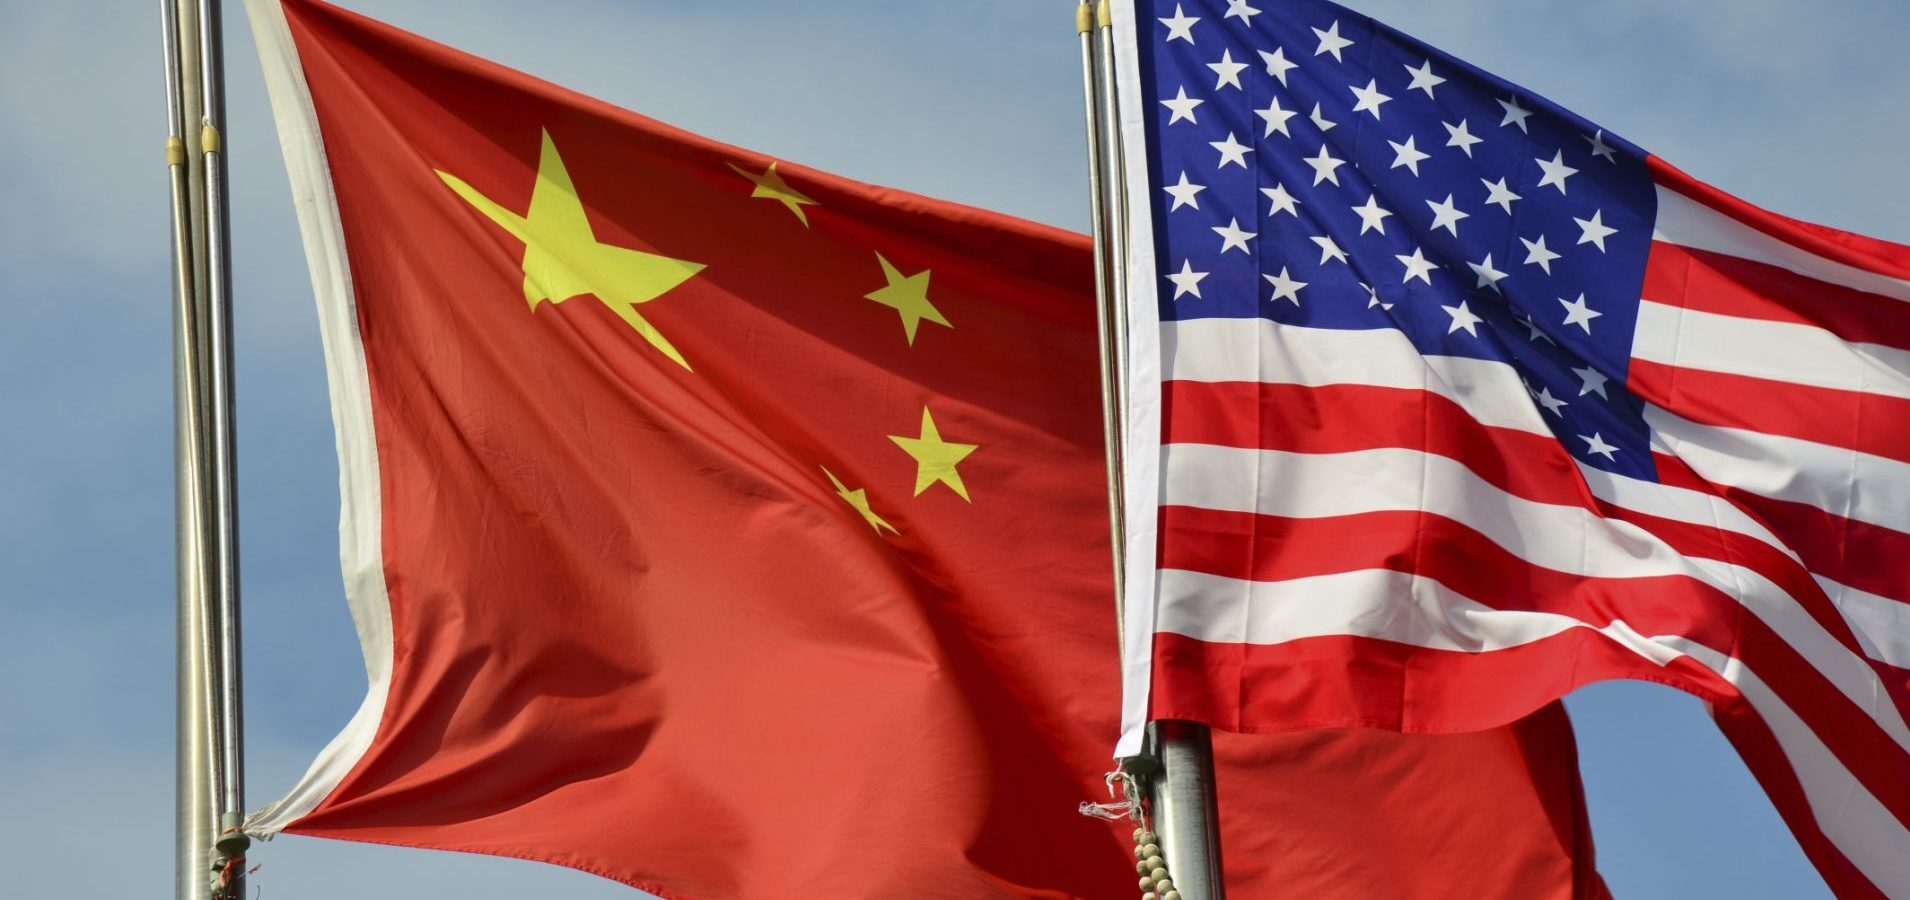 China & USA Flags